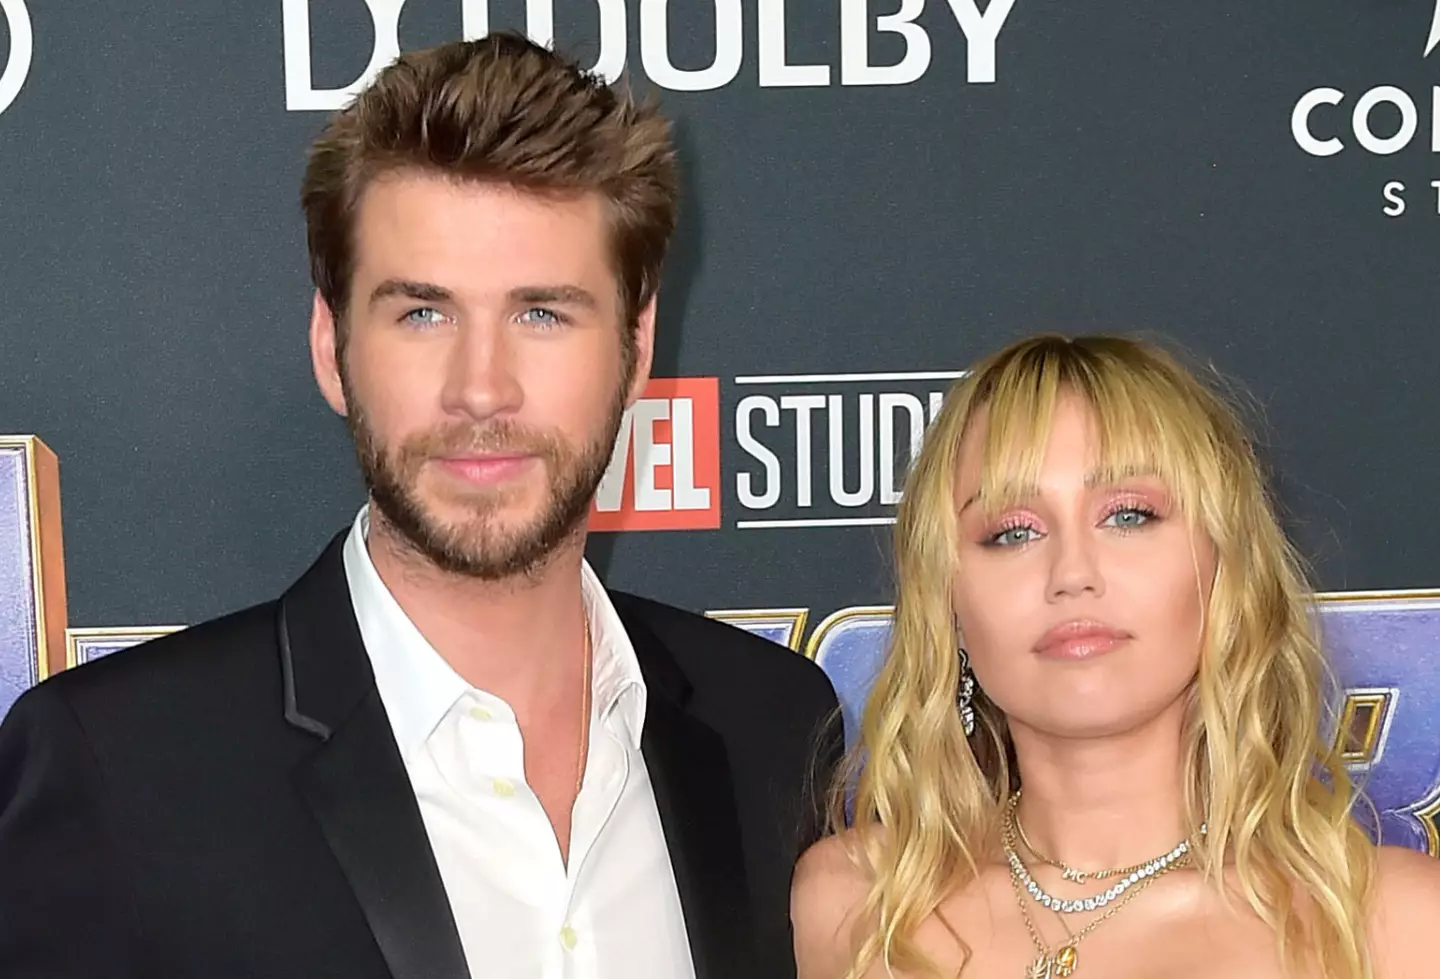 Miley Cyrus and Liam Hemsworth split in 2019.